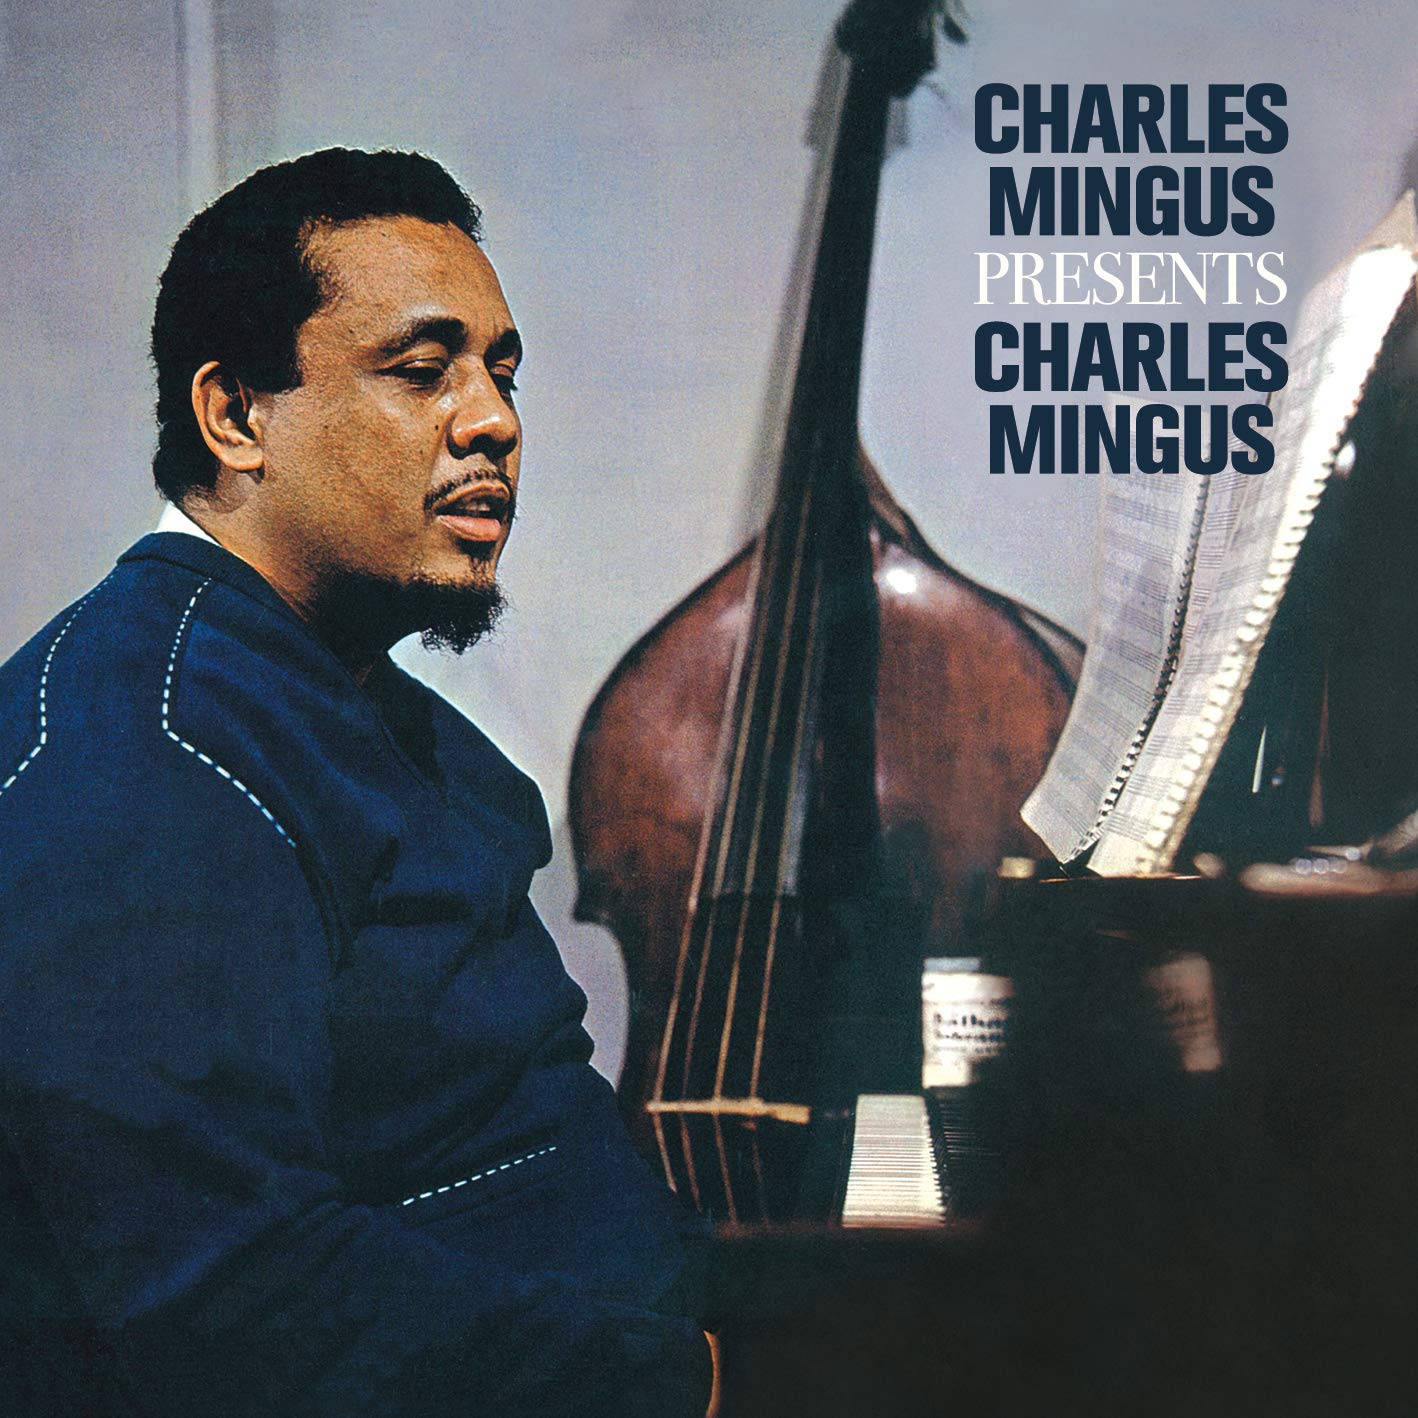 Charles Mingus Album Cover Wallpaper